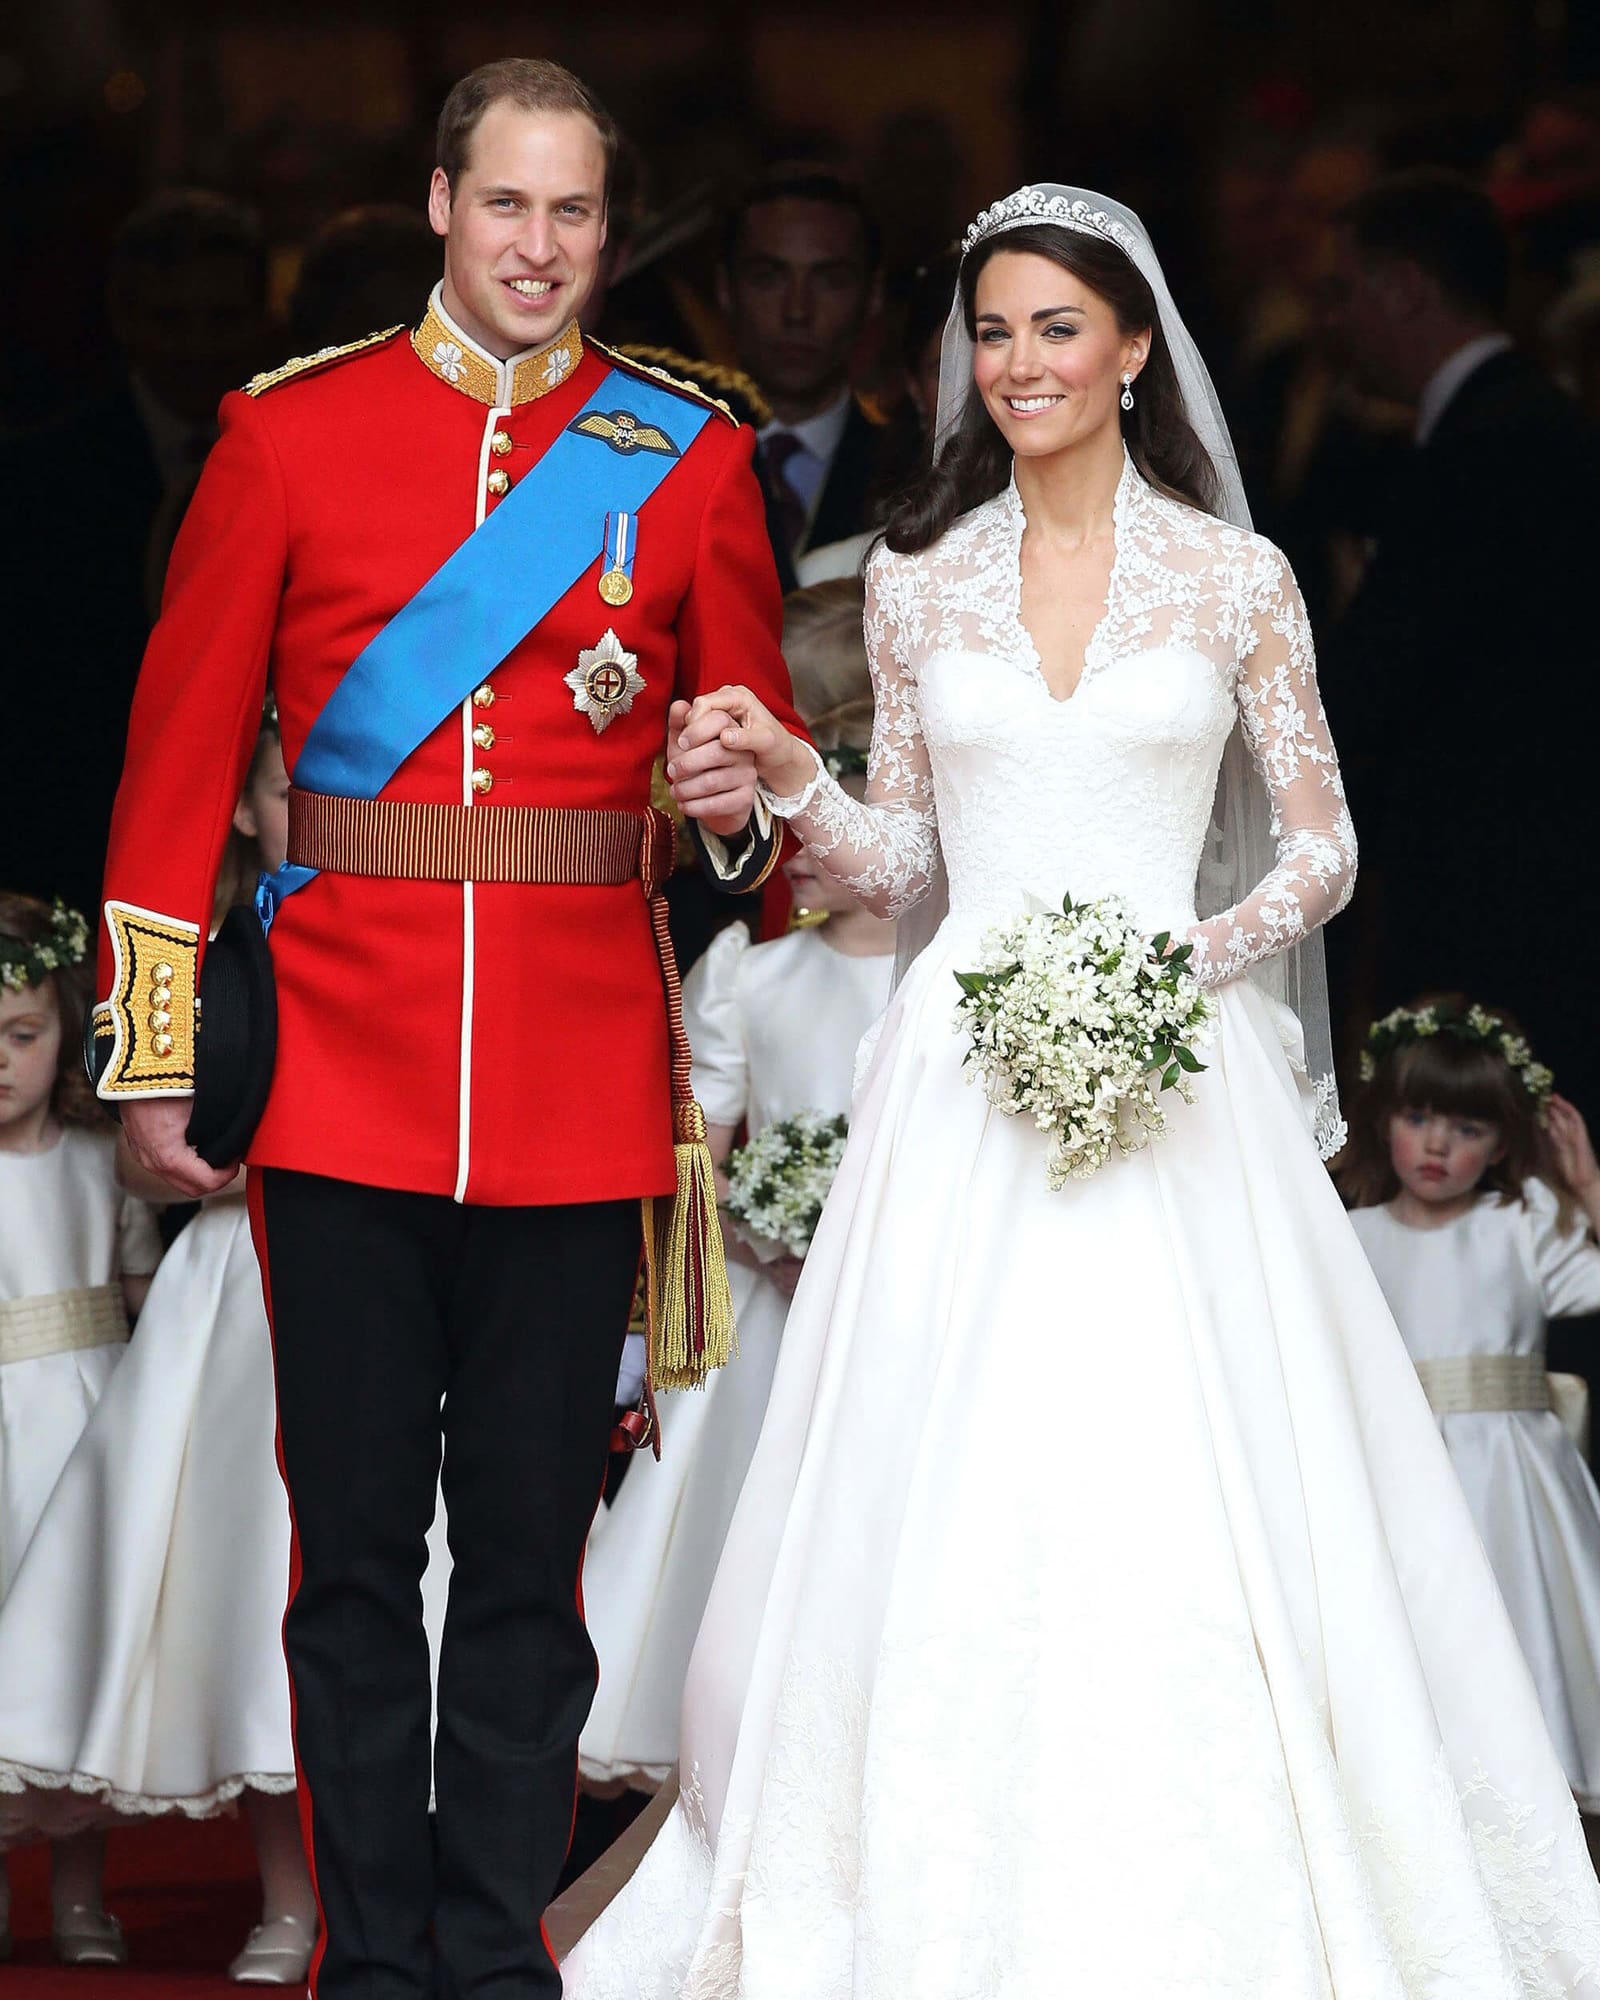 Catherine, Duchess of Cambridge, wore an Alexander McQueen dress by Sarah Burton to her wedding. Photo: Chris Jackson/Getty Images